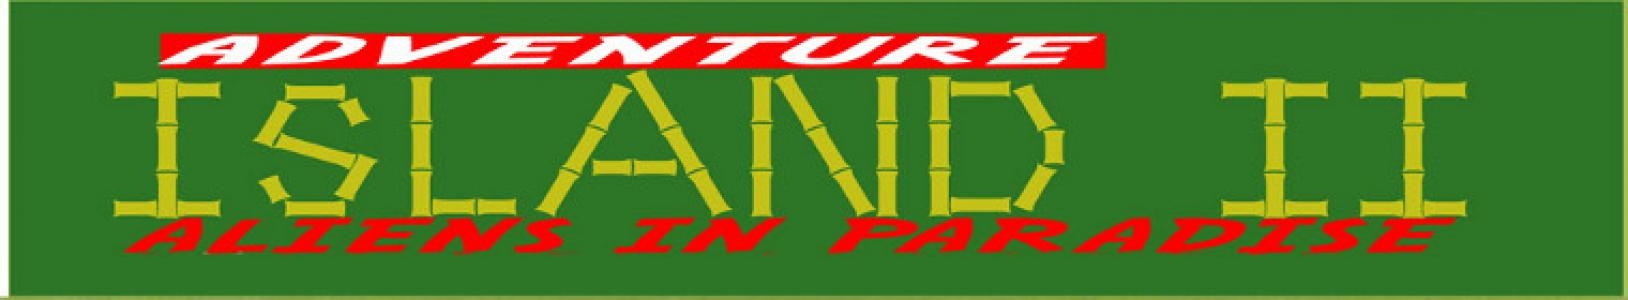 Adventure Island II: Aliens in Paradise banner